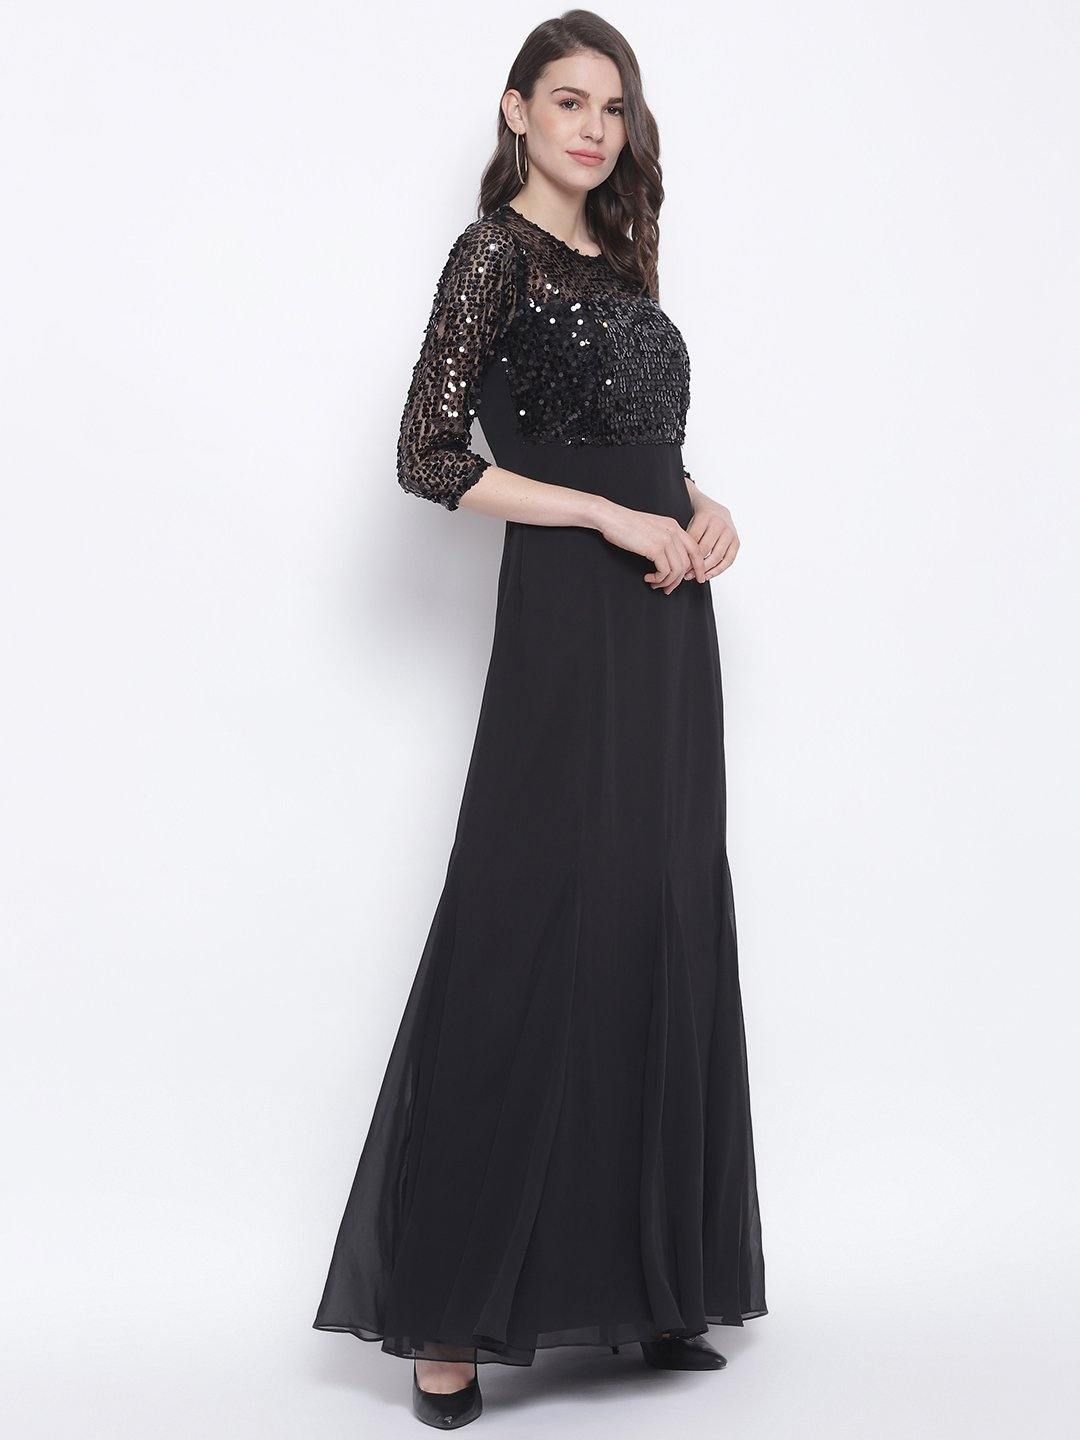 Mônot Evening Dresses for Women - Shop on FARFETCH